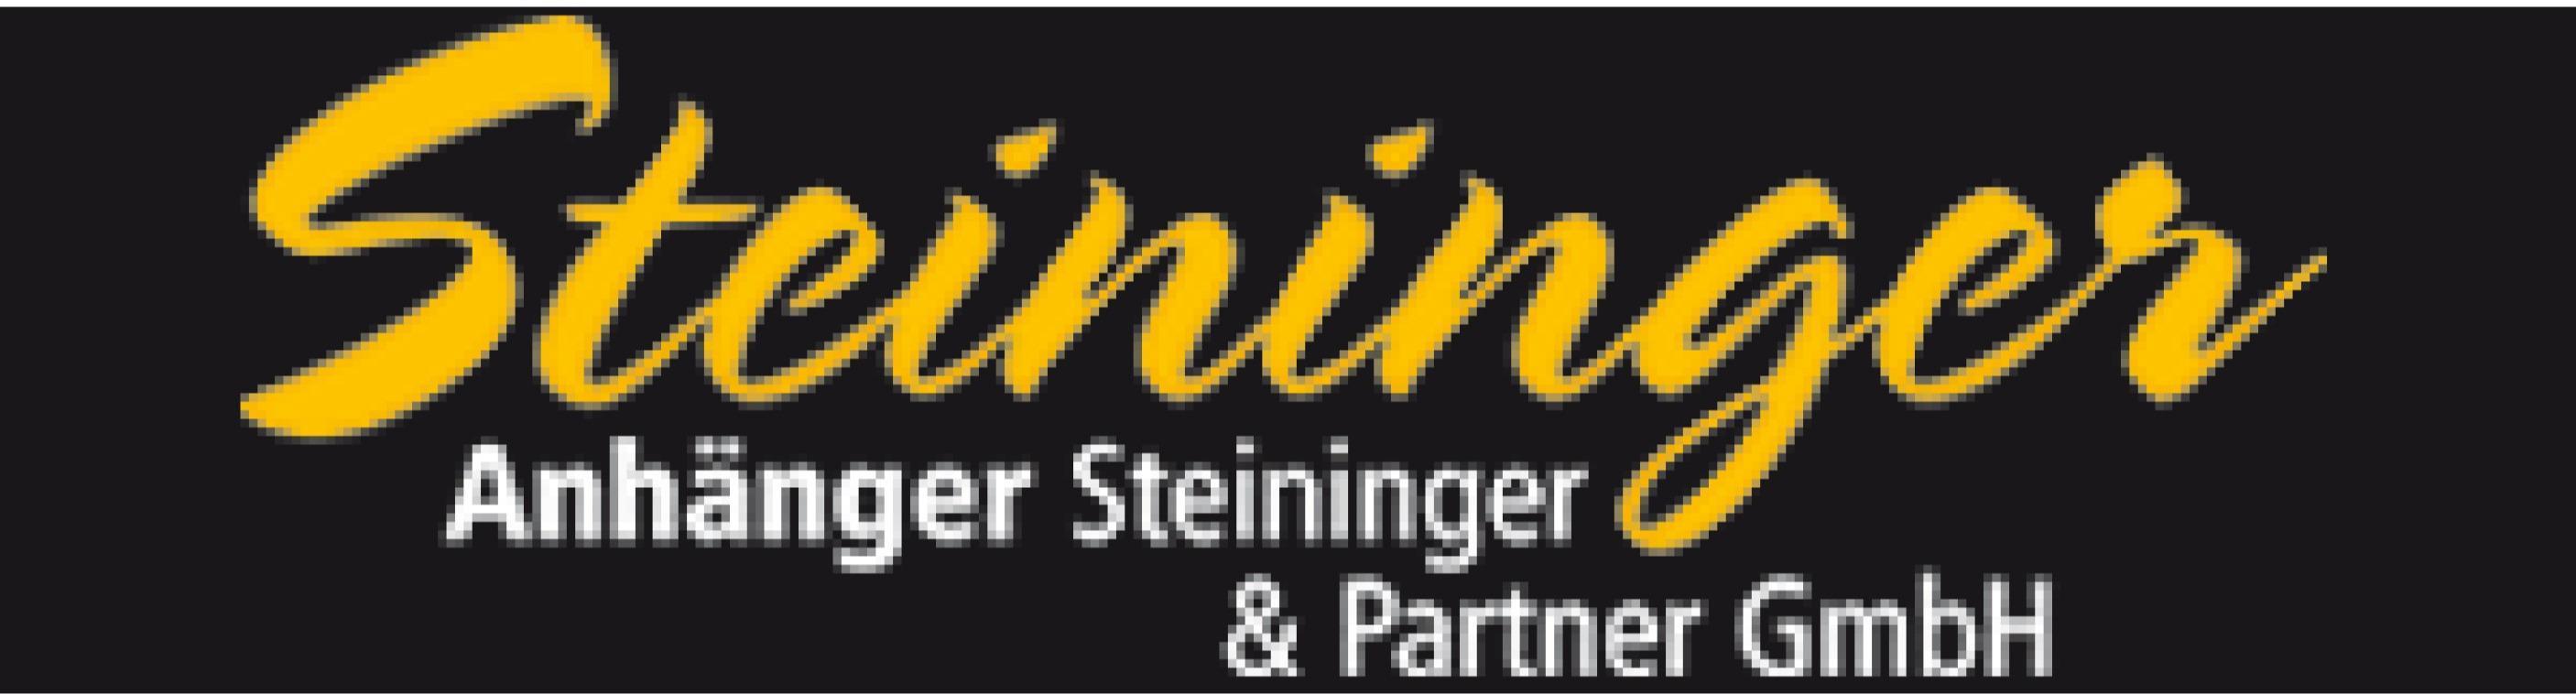 Logo Anhänger Steininger & Partner GmbH